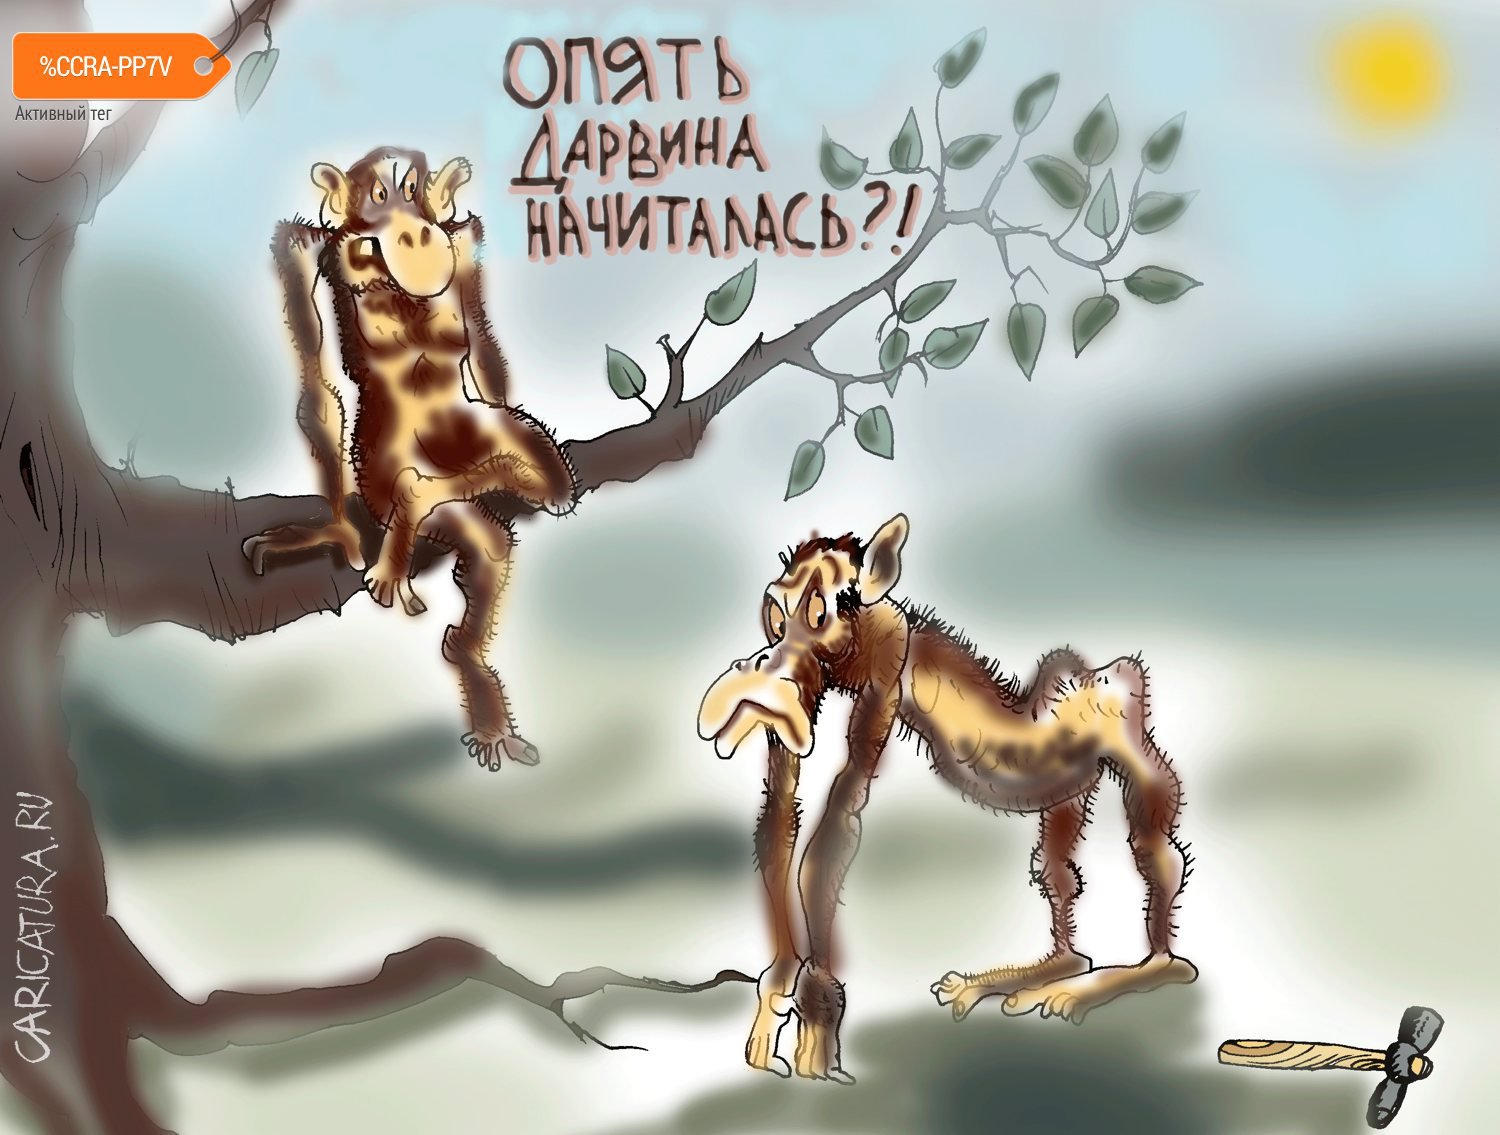 Карикатура "Начитанная", Булат Ирсаев